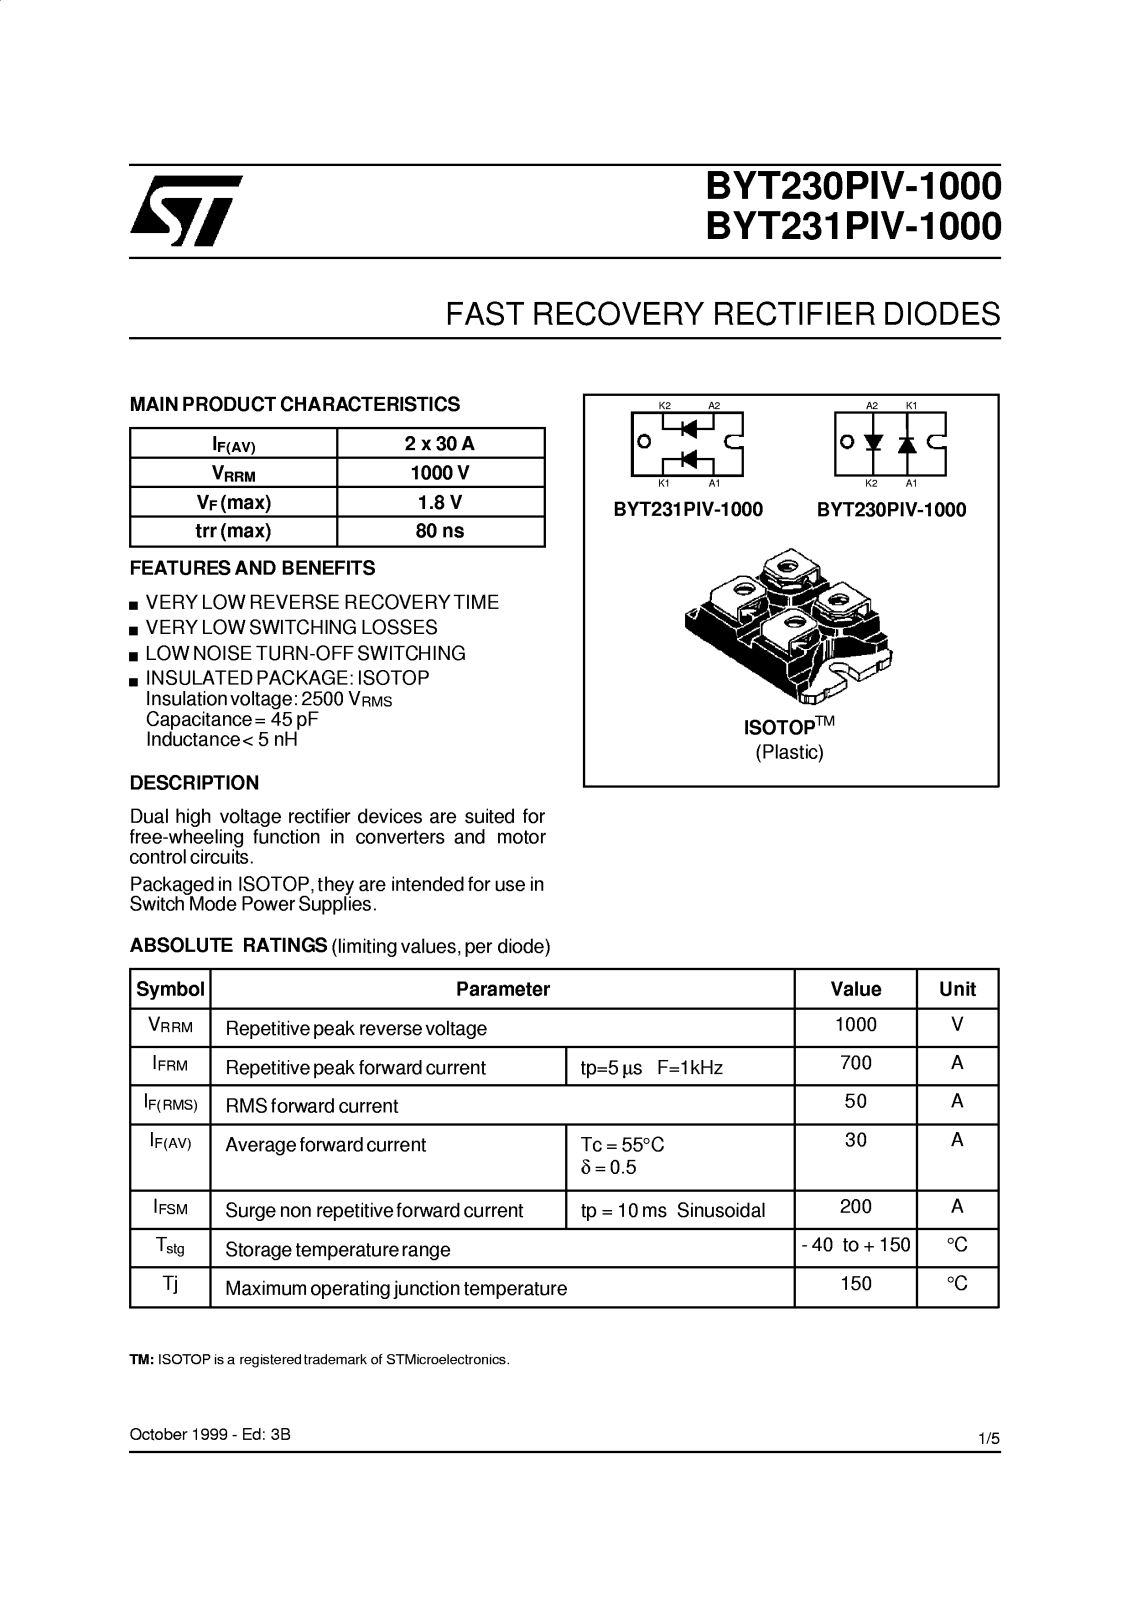 SGS Thomson Microelectronics BYT231PIV-1000, BYT230PIV-1000 Datasheet